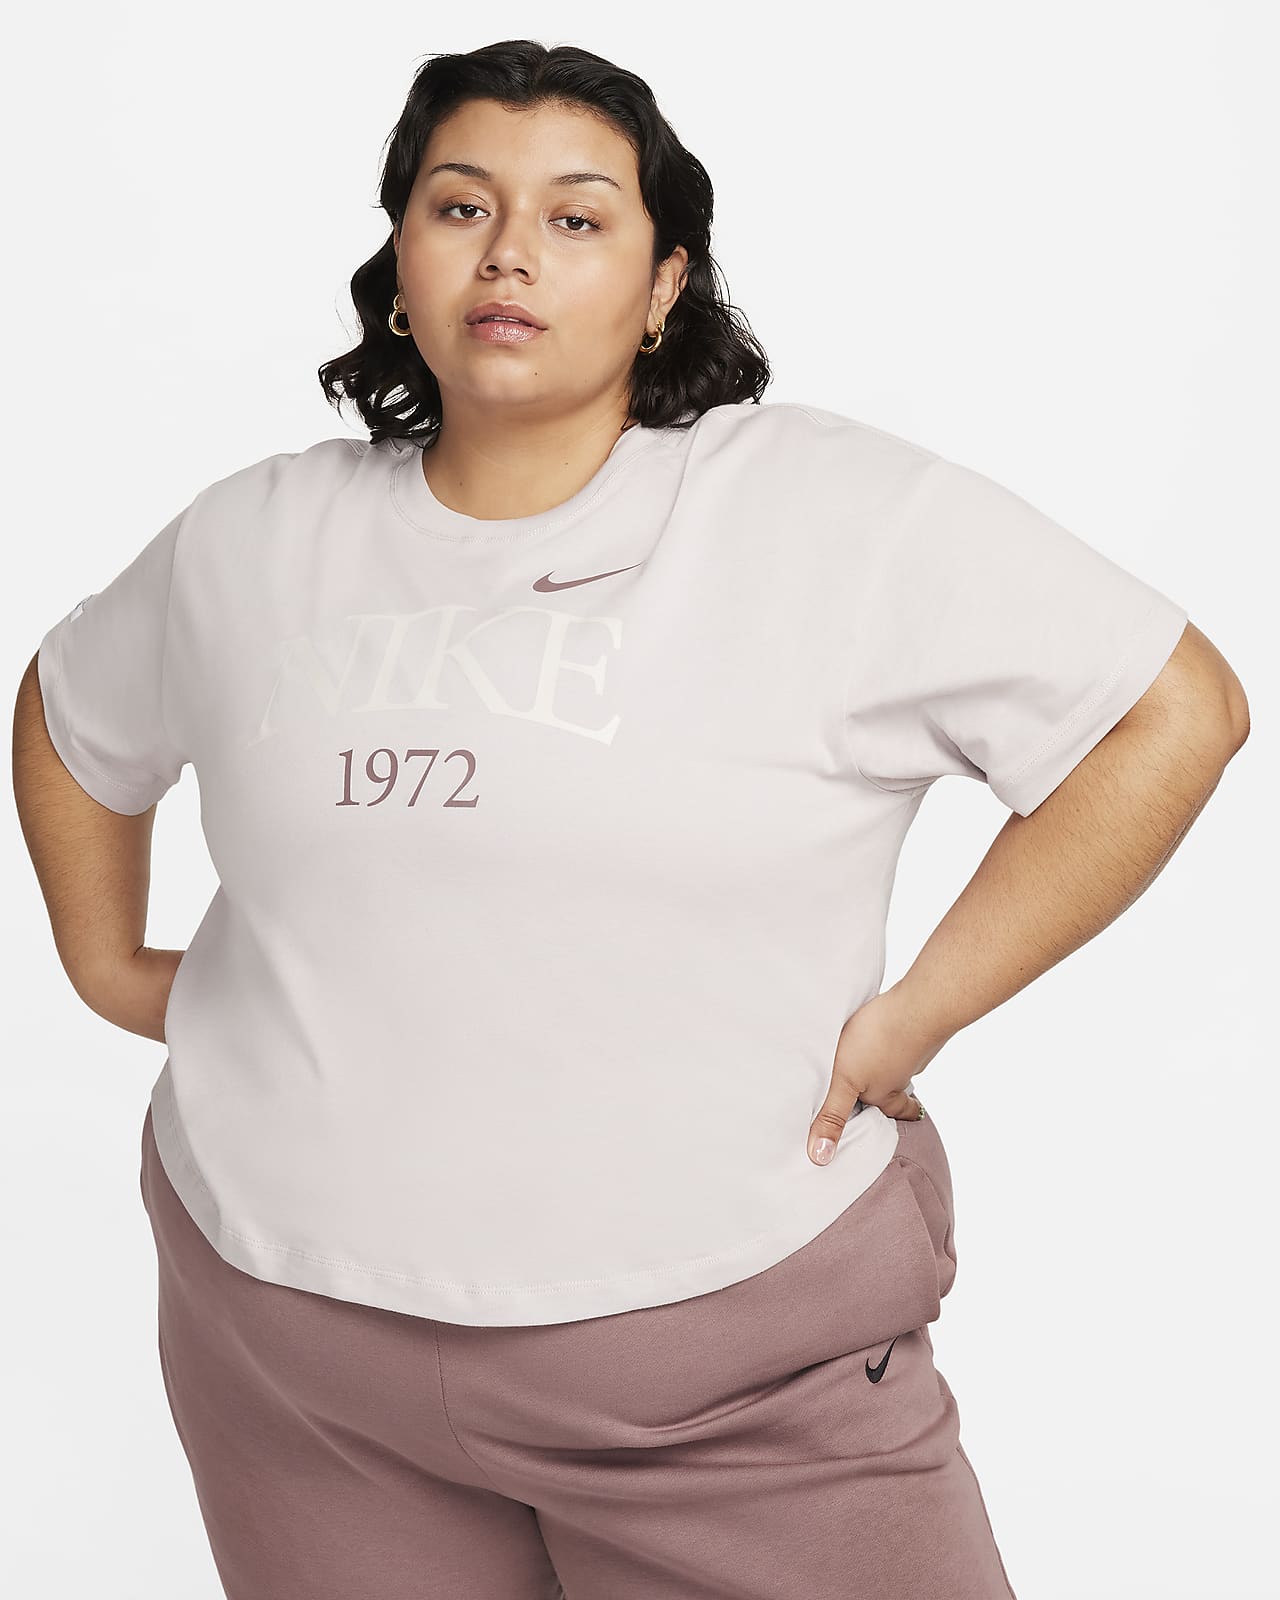 T-shirt Nike Sportswear Classic för kvinnor (Plus Size)